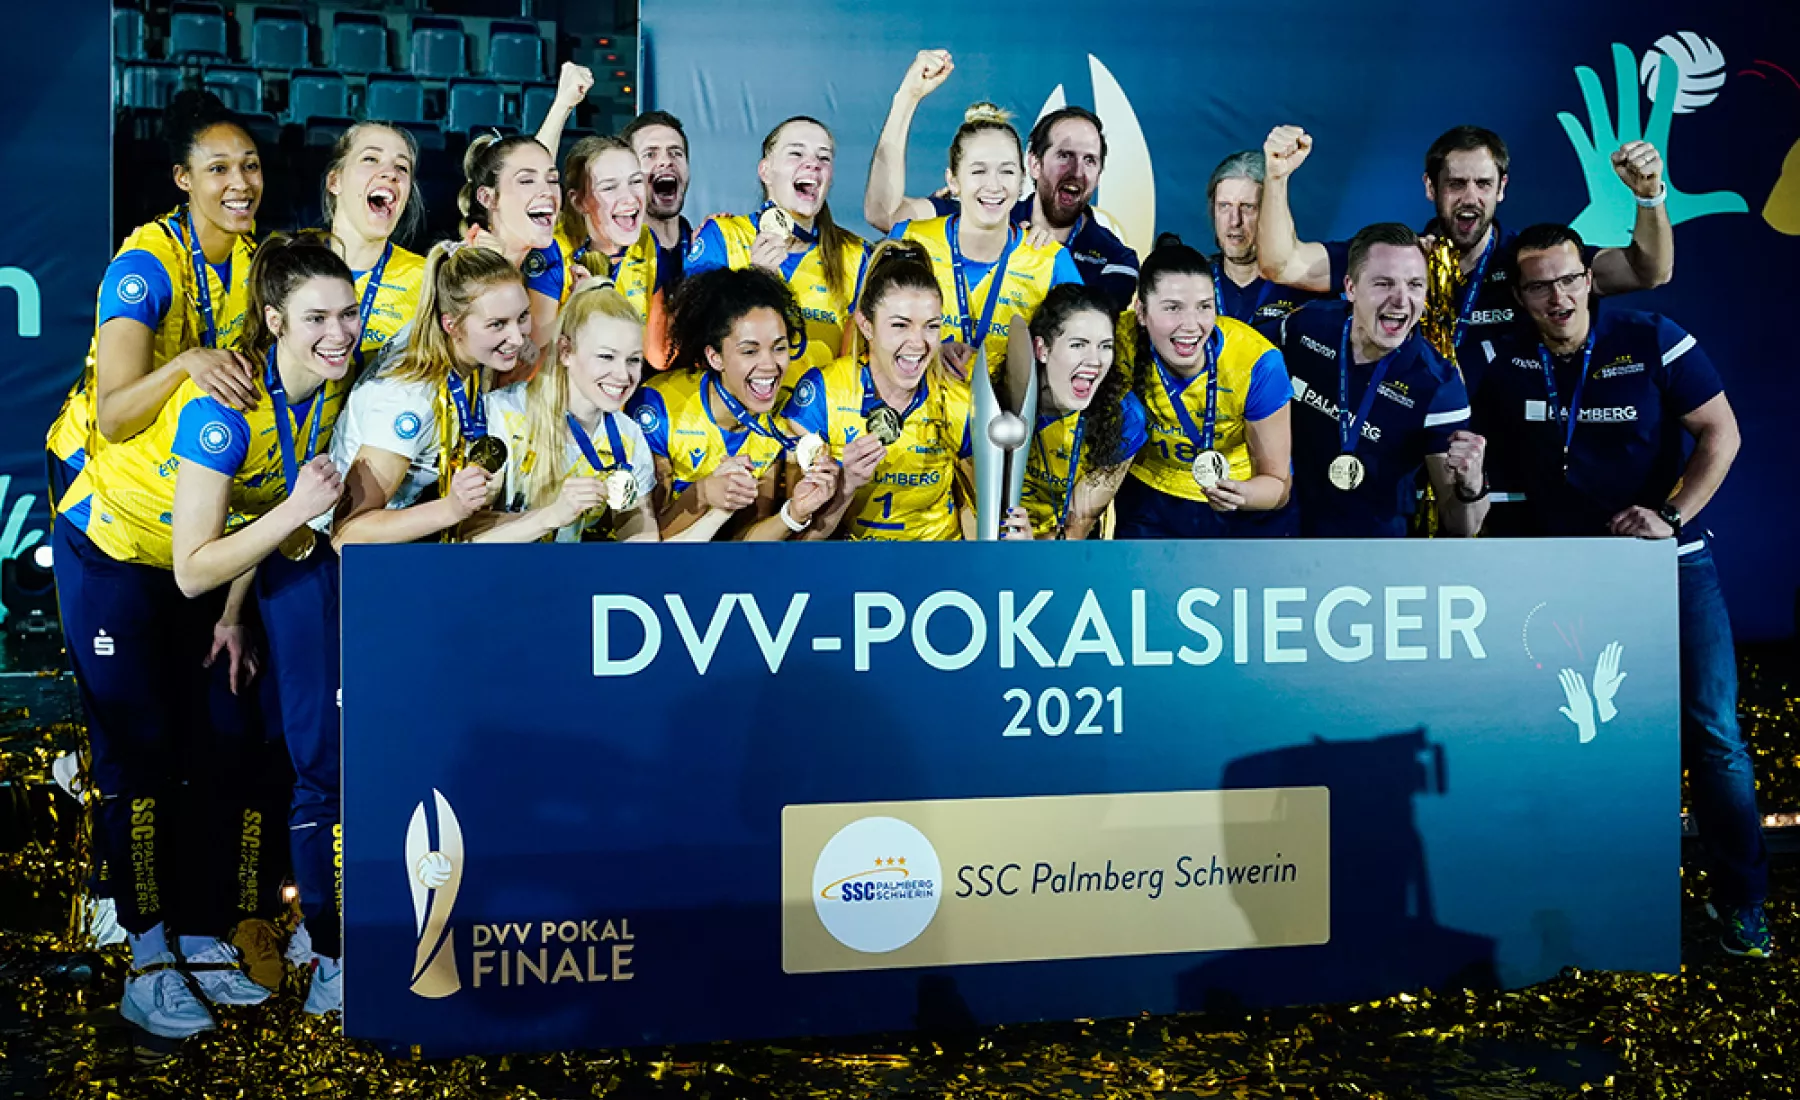 DVV-Pokalsieger 2021: SSC Palmberg Schwerin